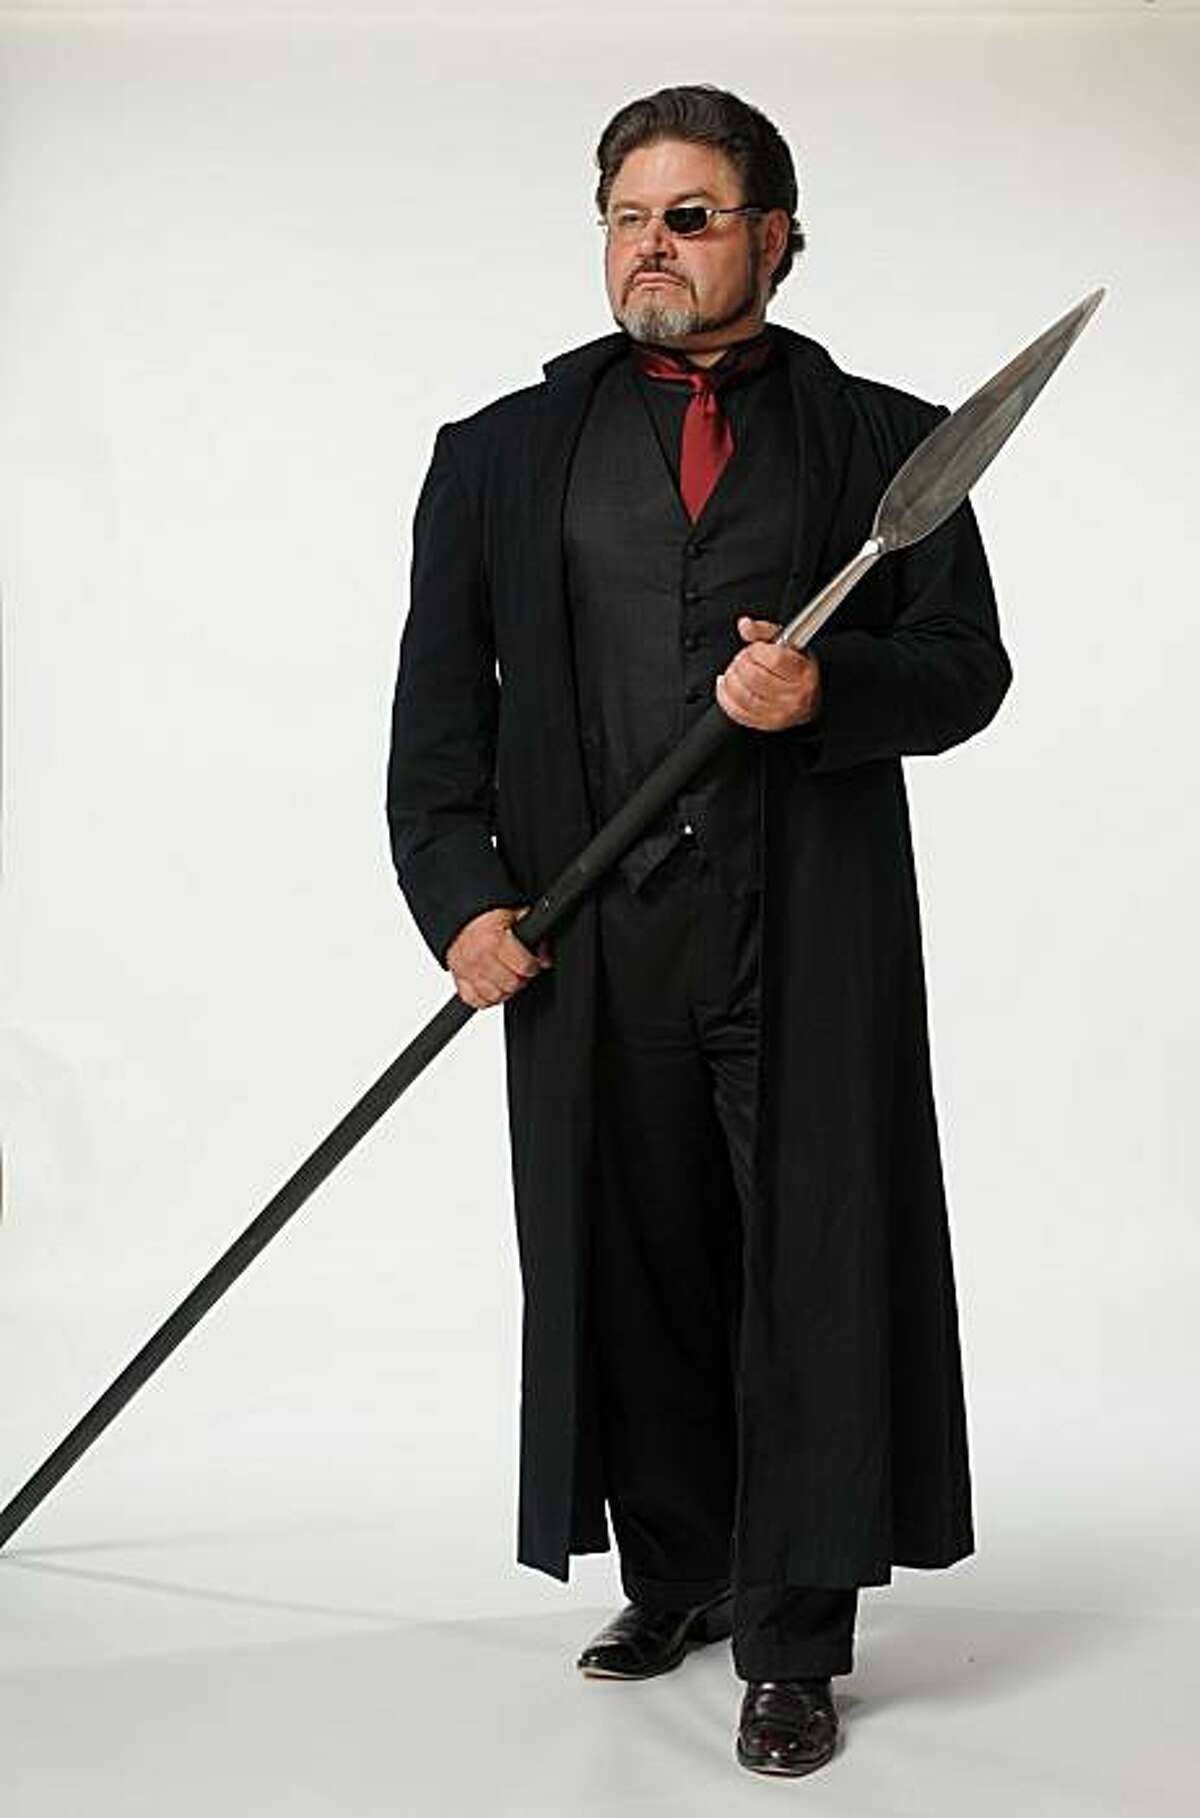 Baritone Richard Paul Fink as Wotan in "Legend of the Ring" at Berkeley Opera